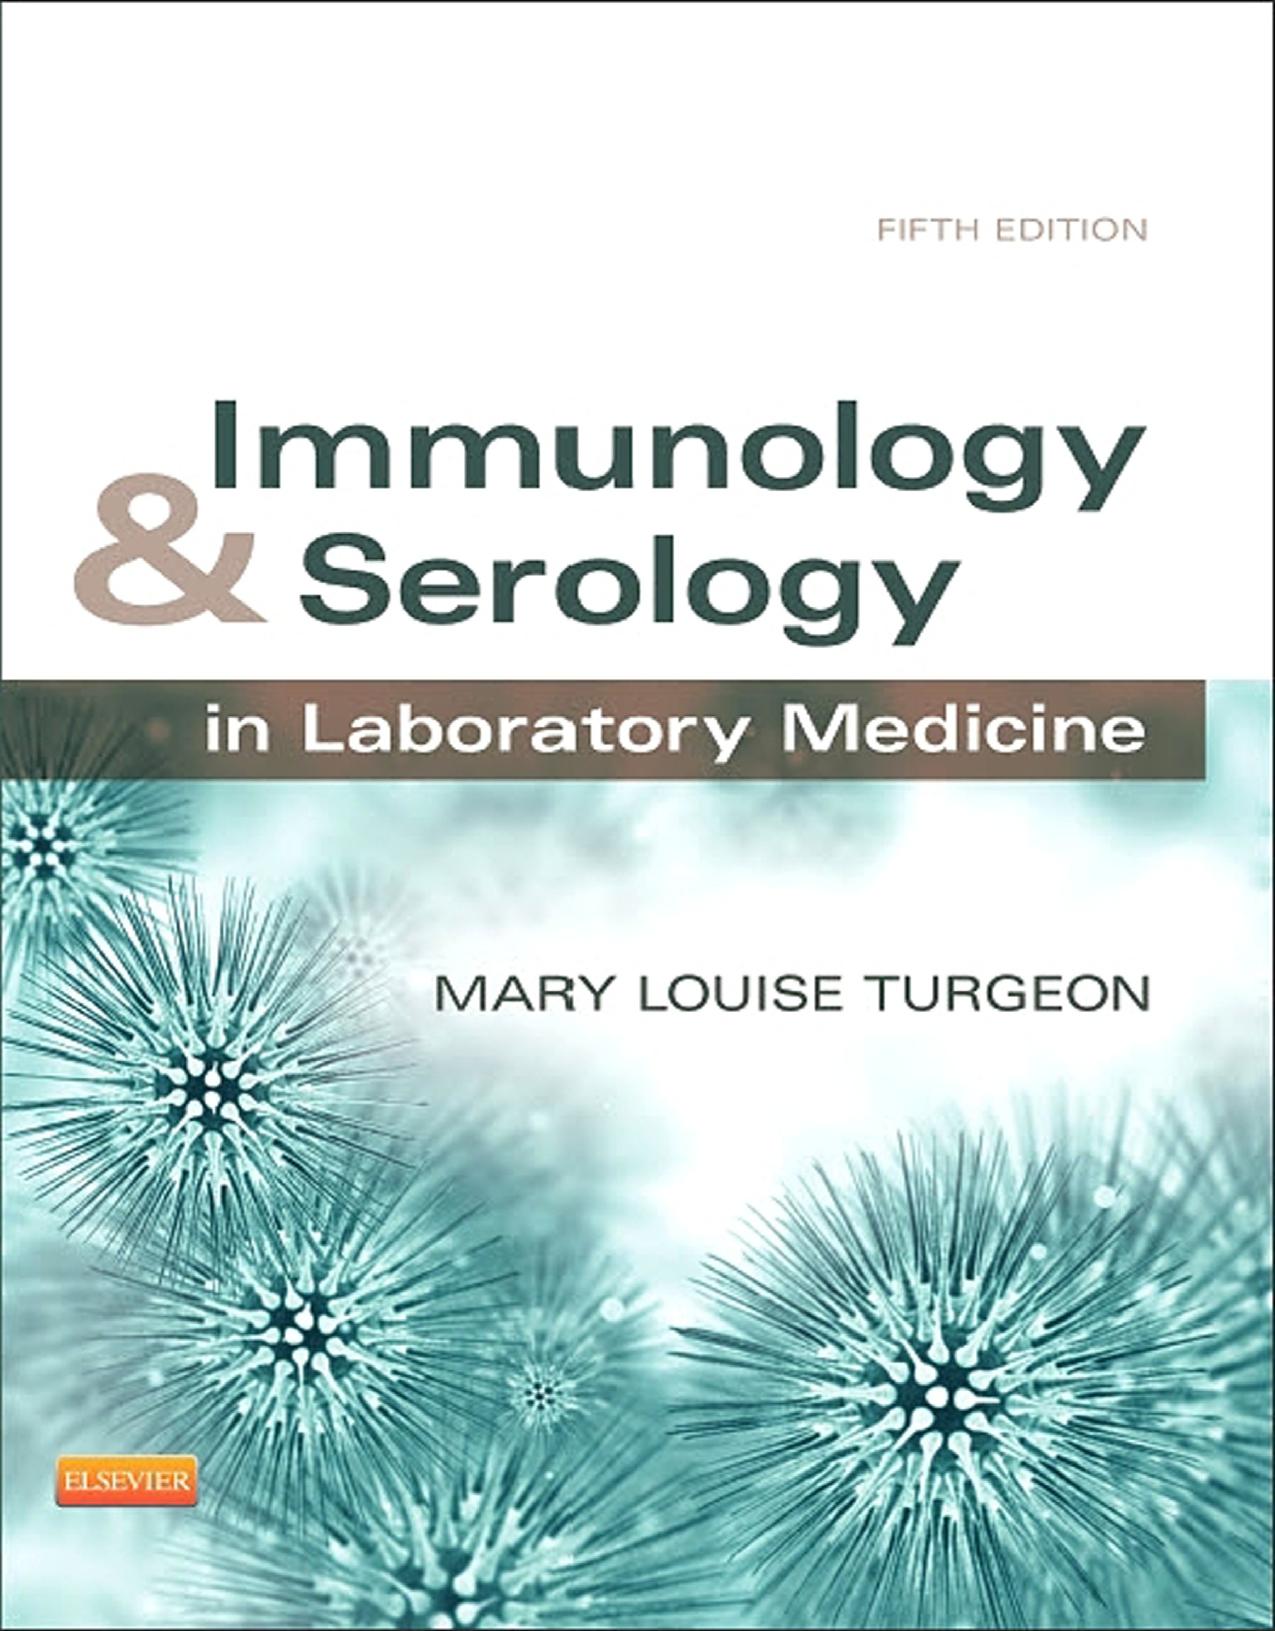 Immunology and Serology in Laboratory Medicine 5th ed. 2014.pdf